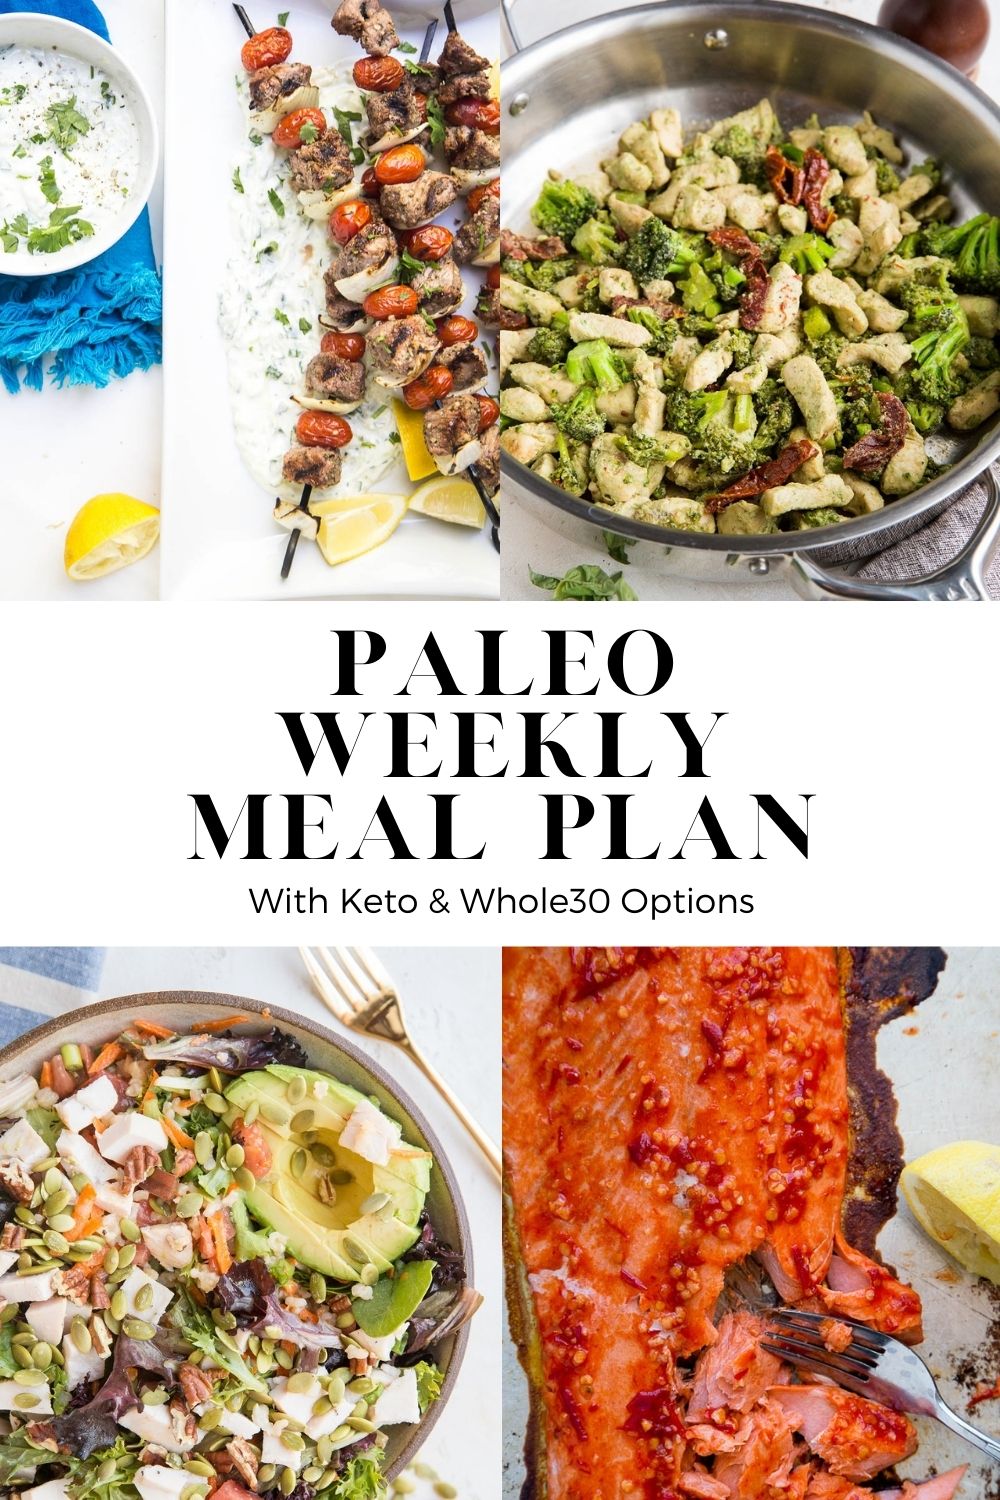 https://www.perrysplate.com/wp-content/uploads/2021/05/paleo-meal-plan-week-13.jpg